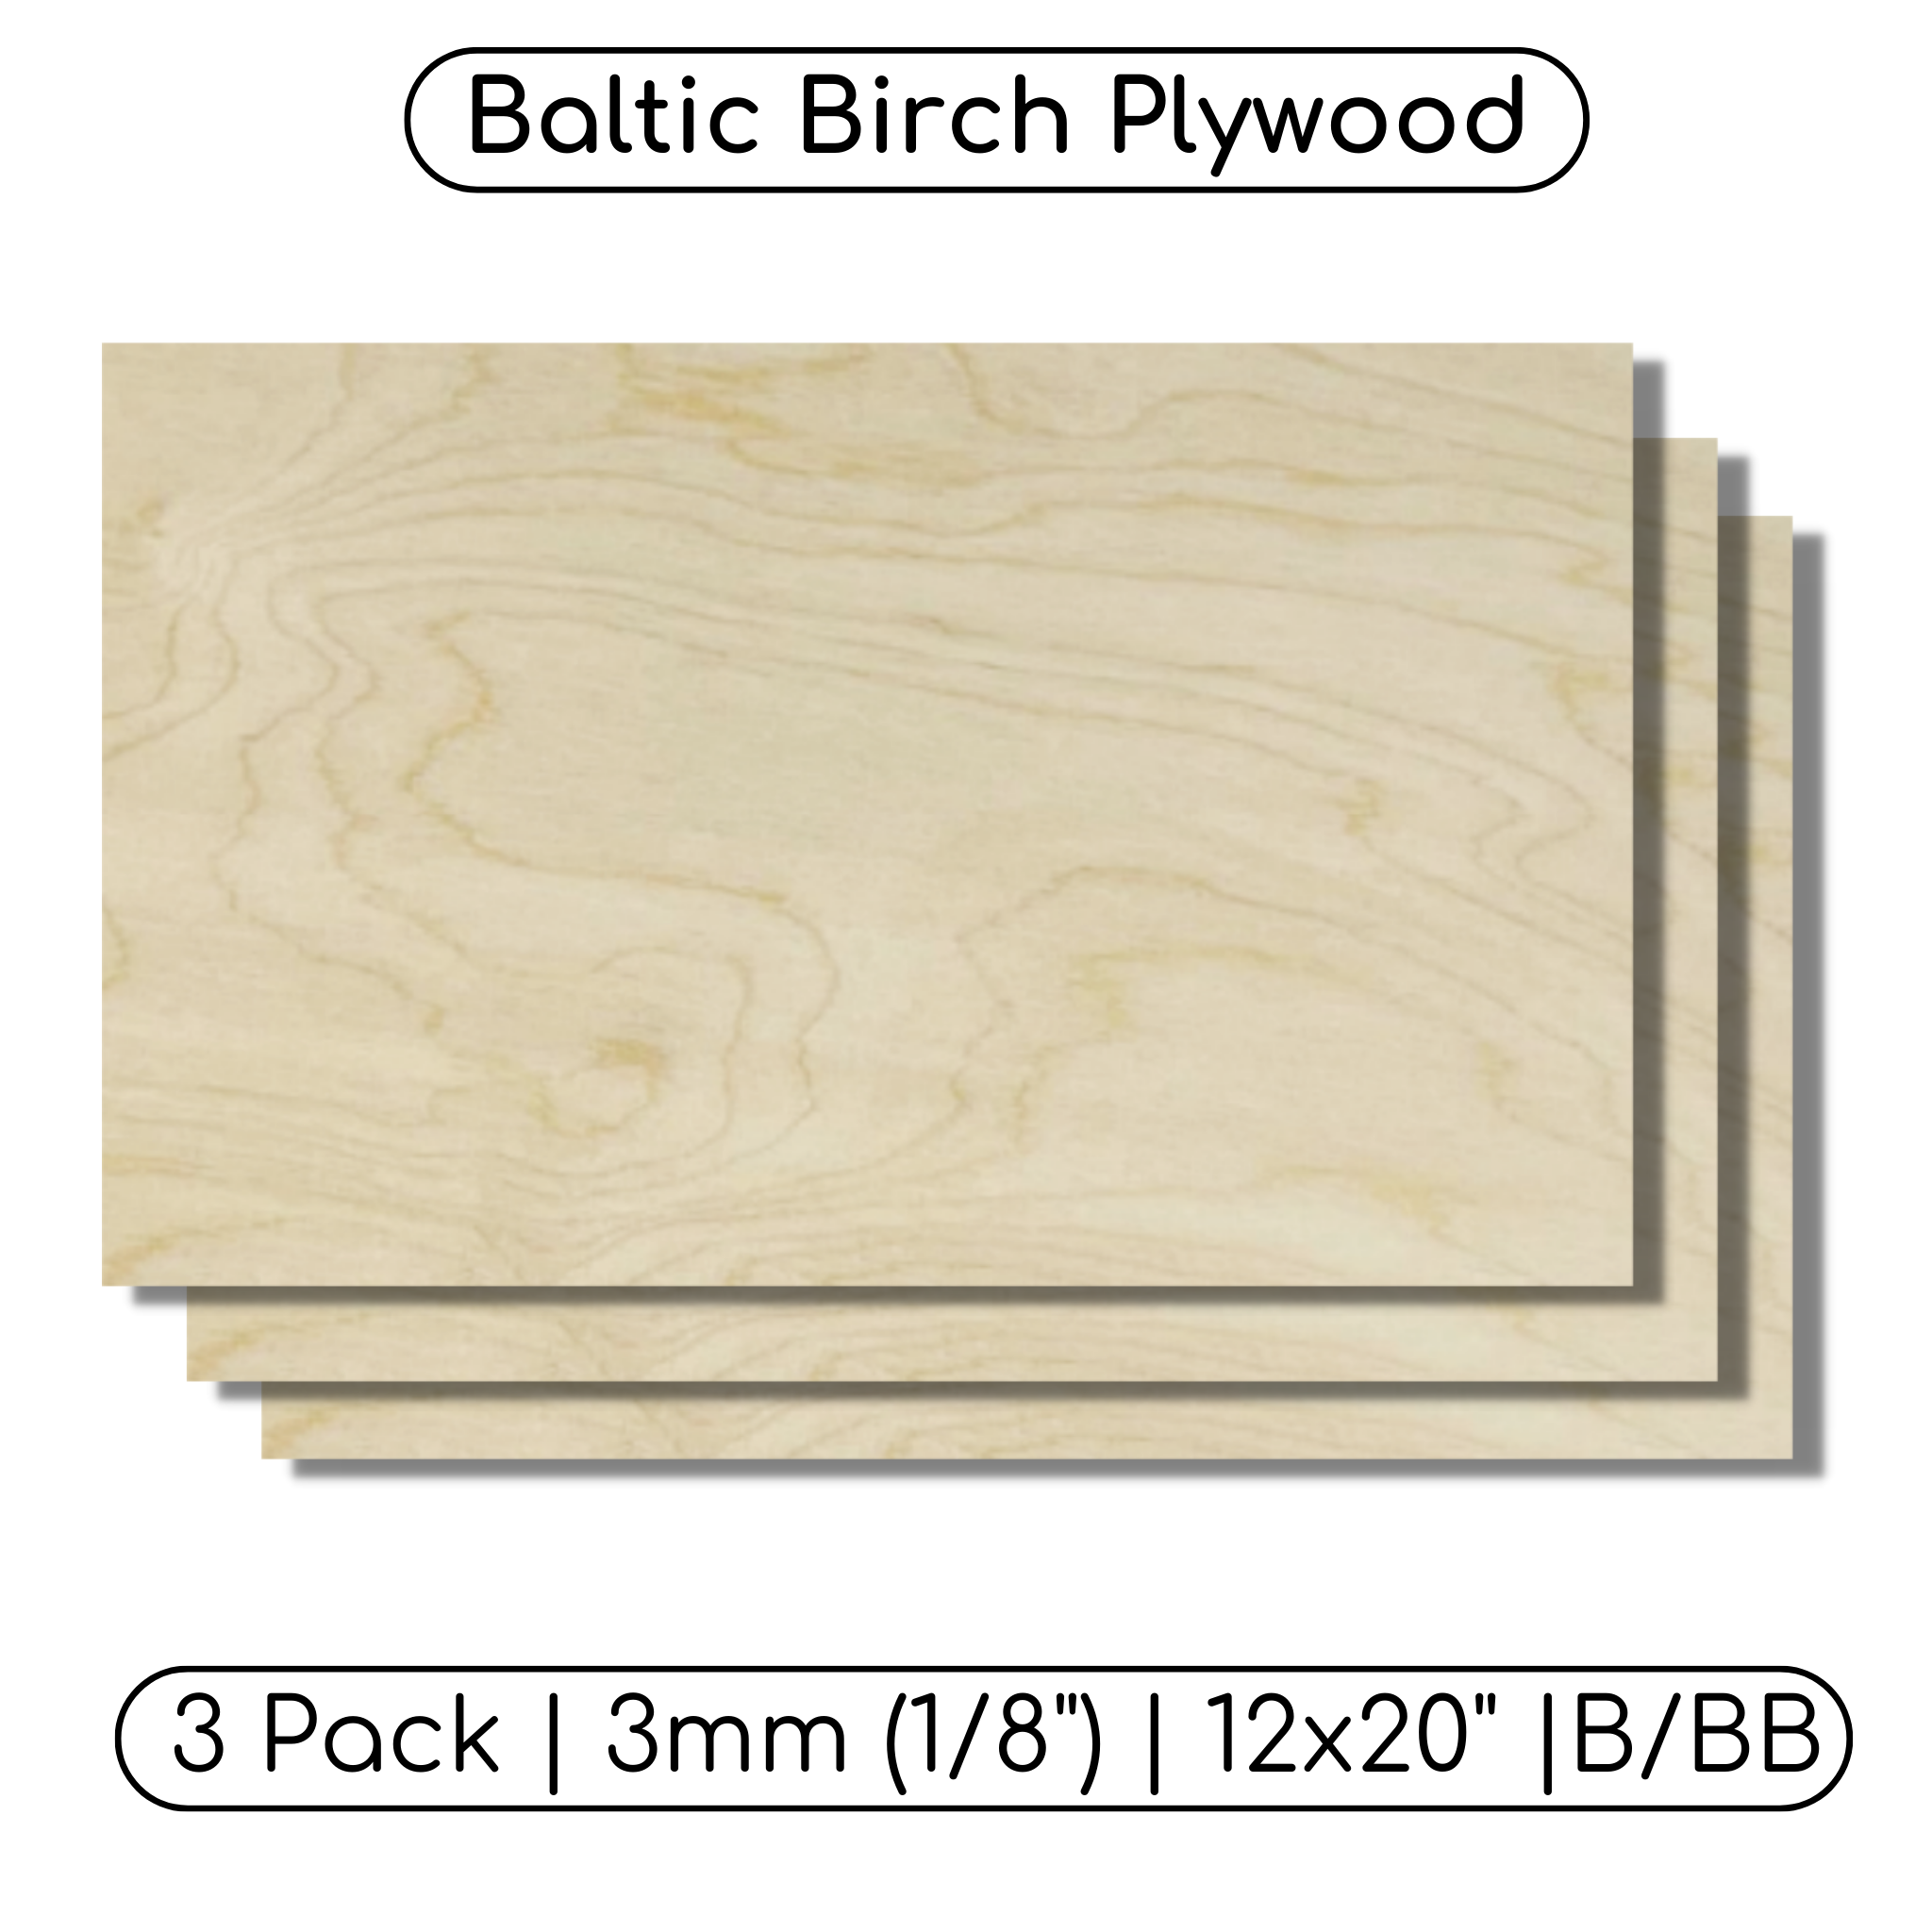 24x24 Baltic Birch Plywood 1/8 3MM, Grade B/BB, Laser Cutter/scroll Saw  Ready. 10 Pack Bundle 